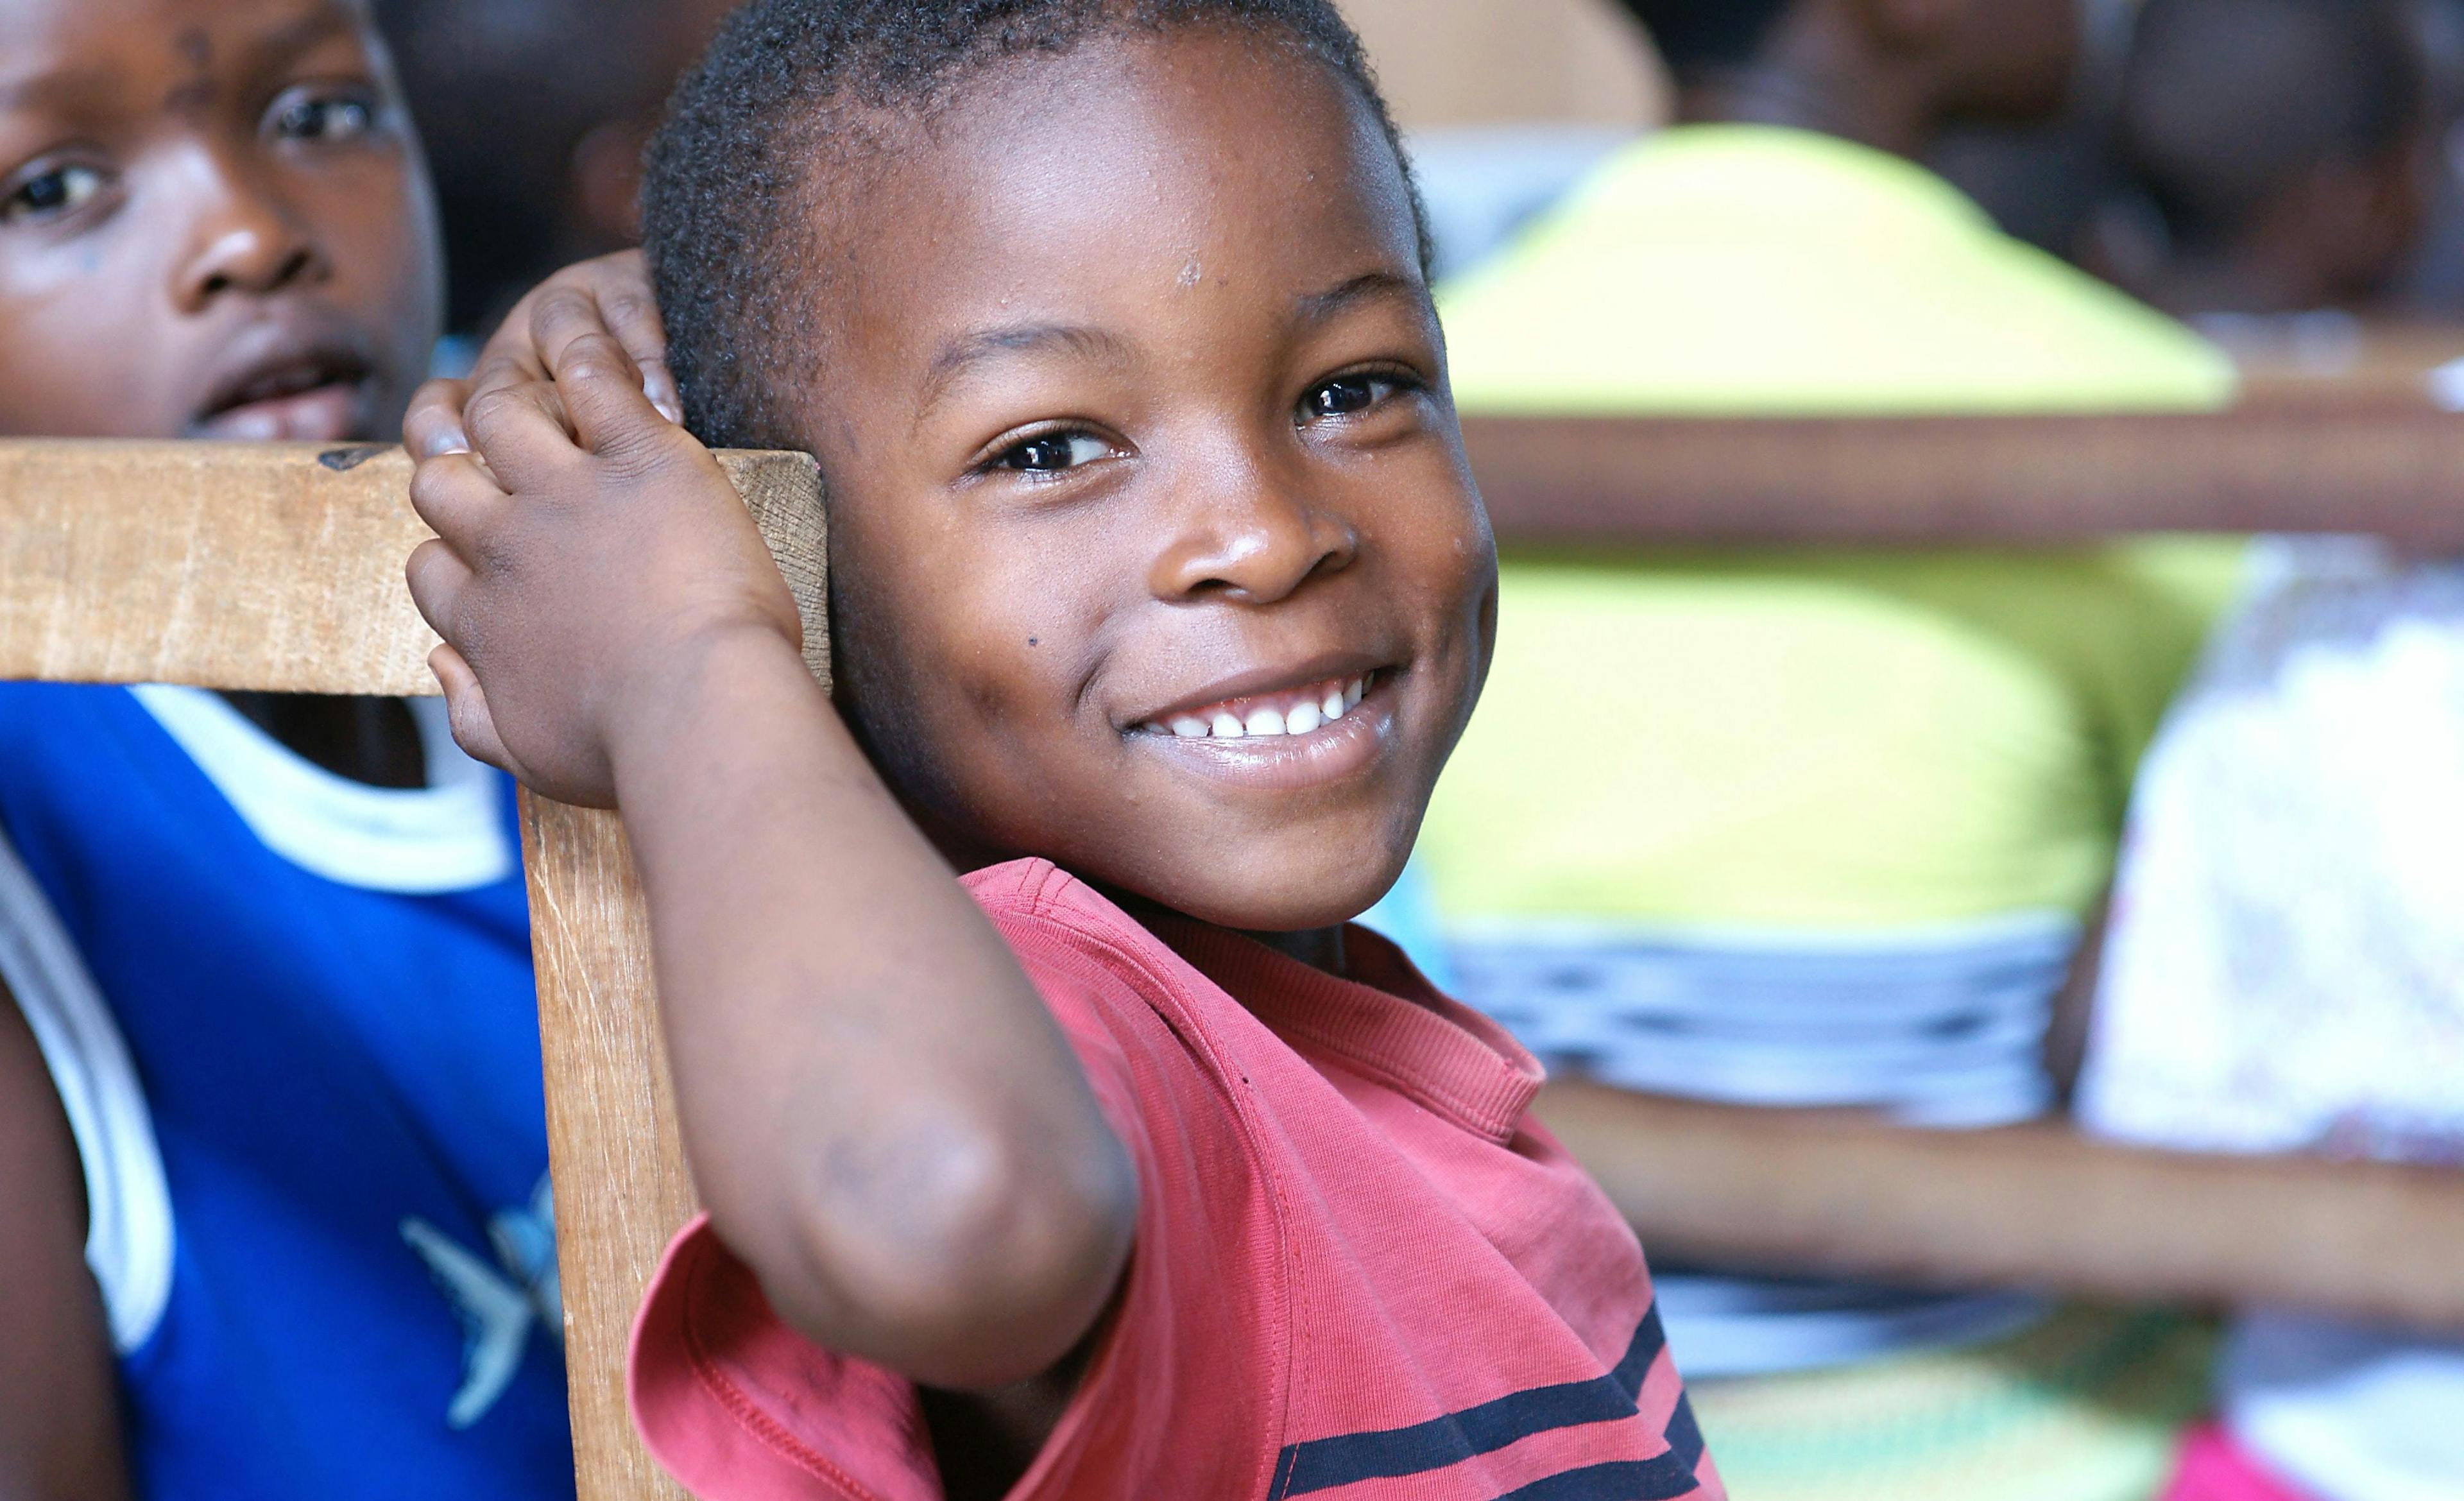 Child smiling in a red shirt Uganda